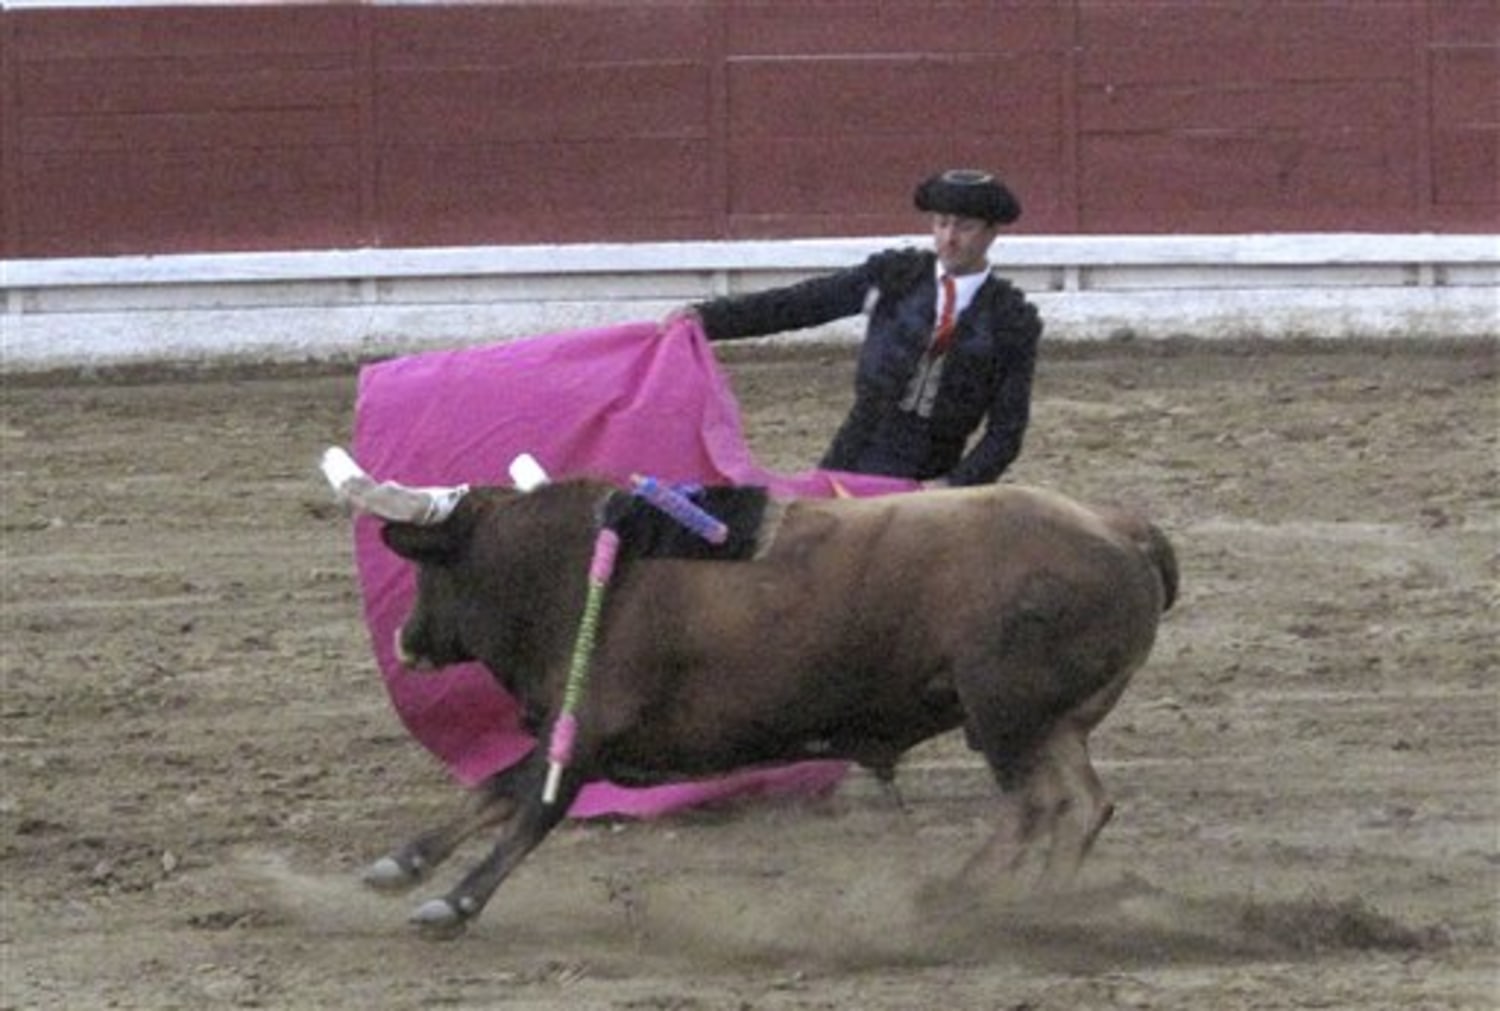 Bullfight melee renews animal-cruelty debate